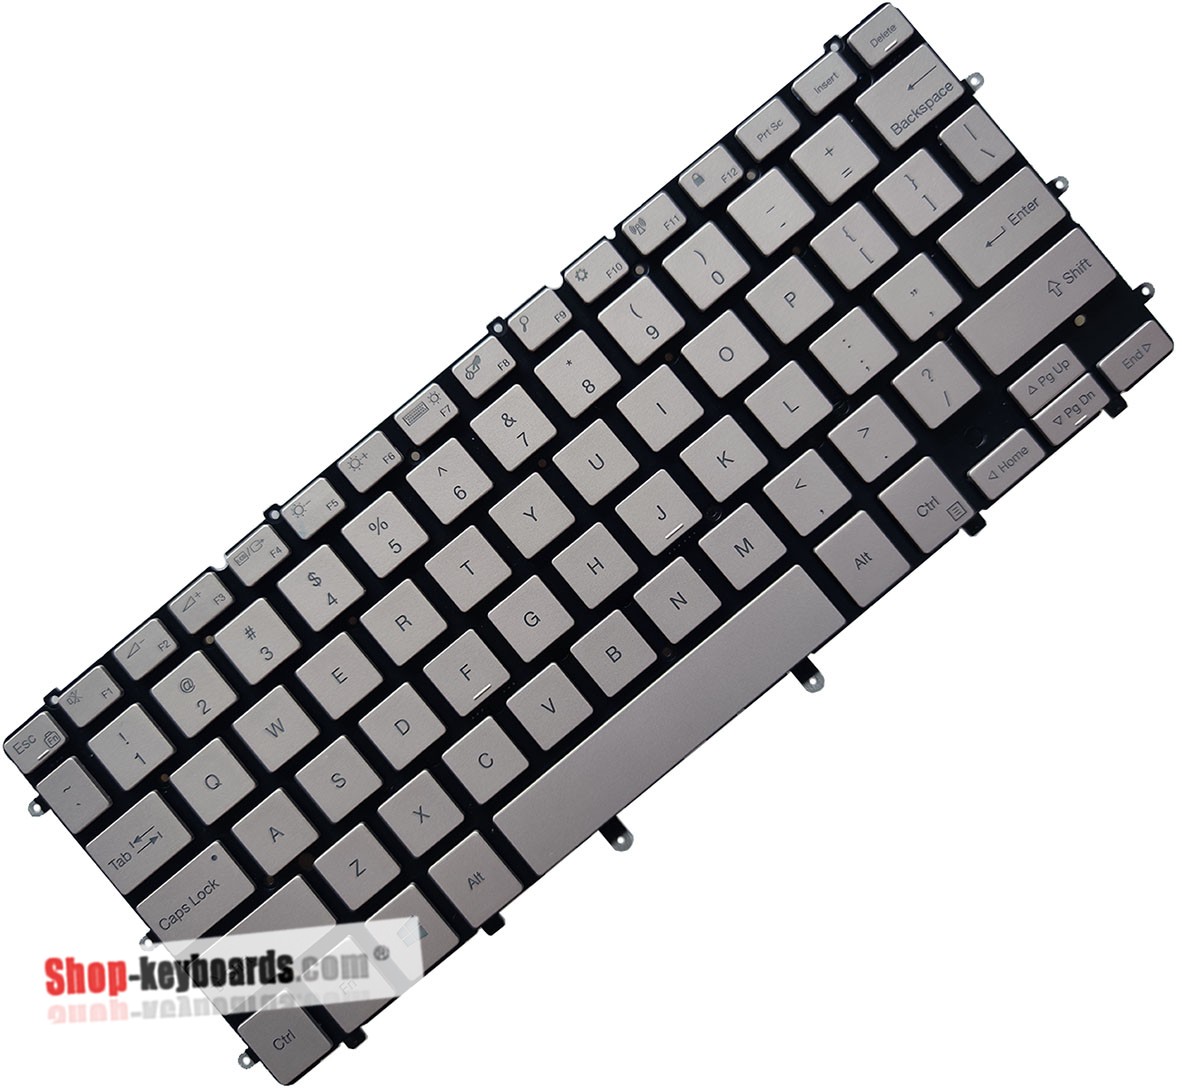 QUANTA AETX7P00020 Keyboard replacement